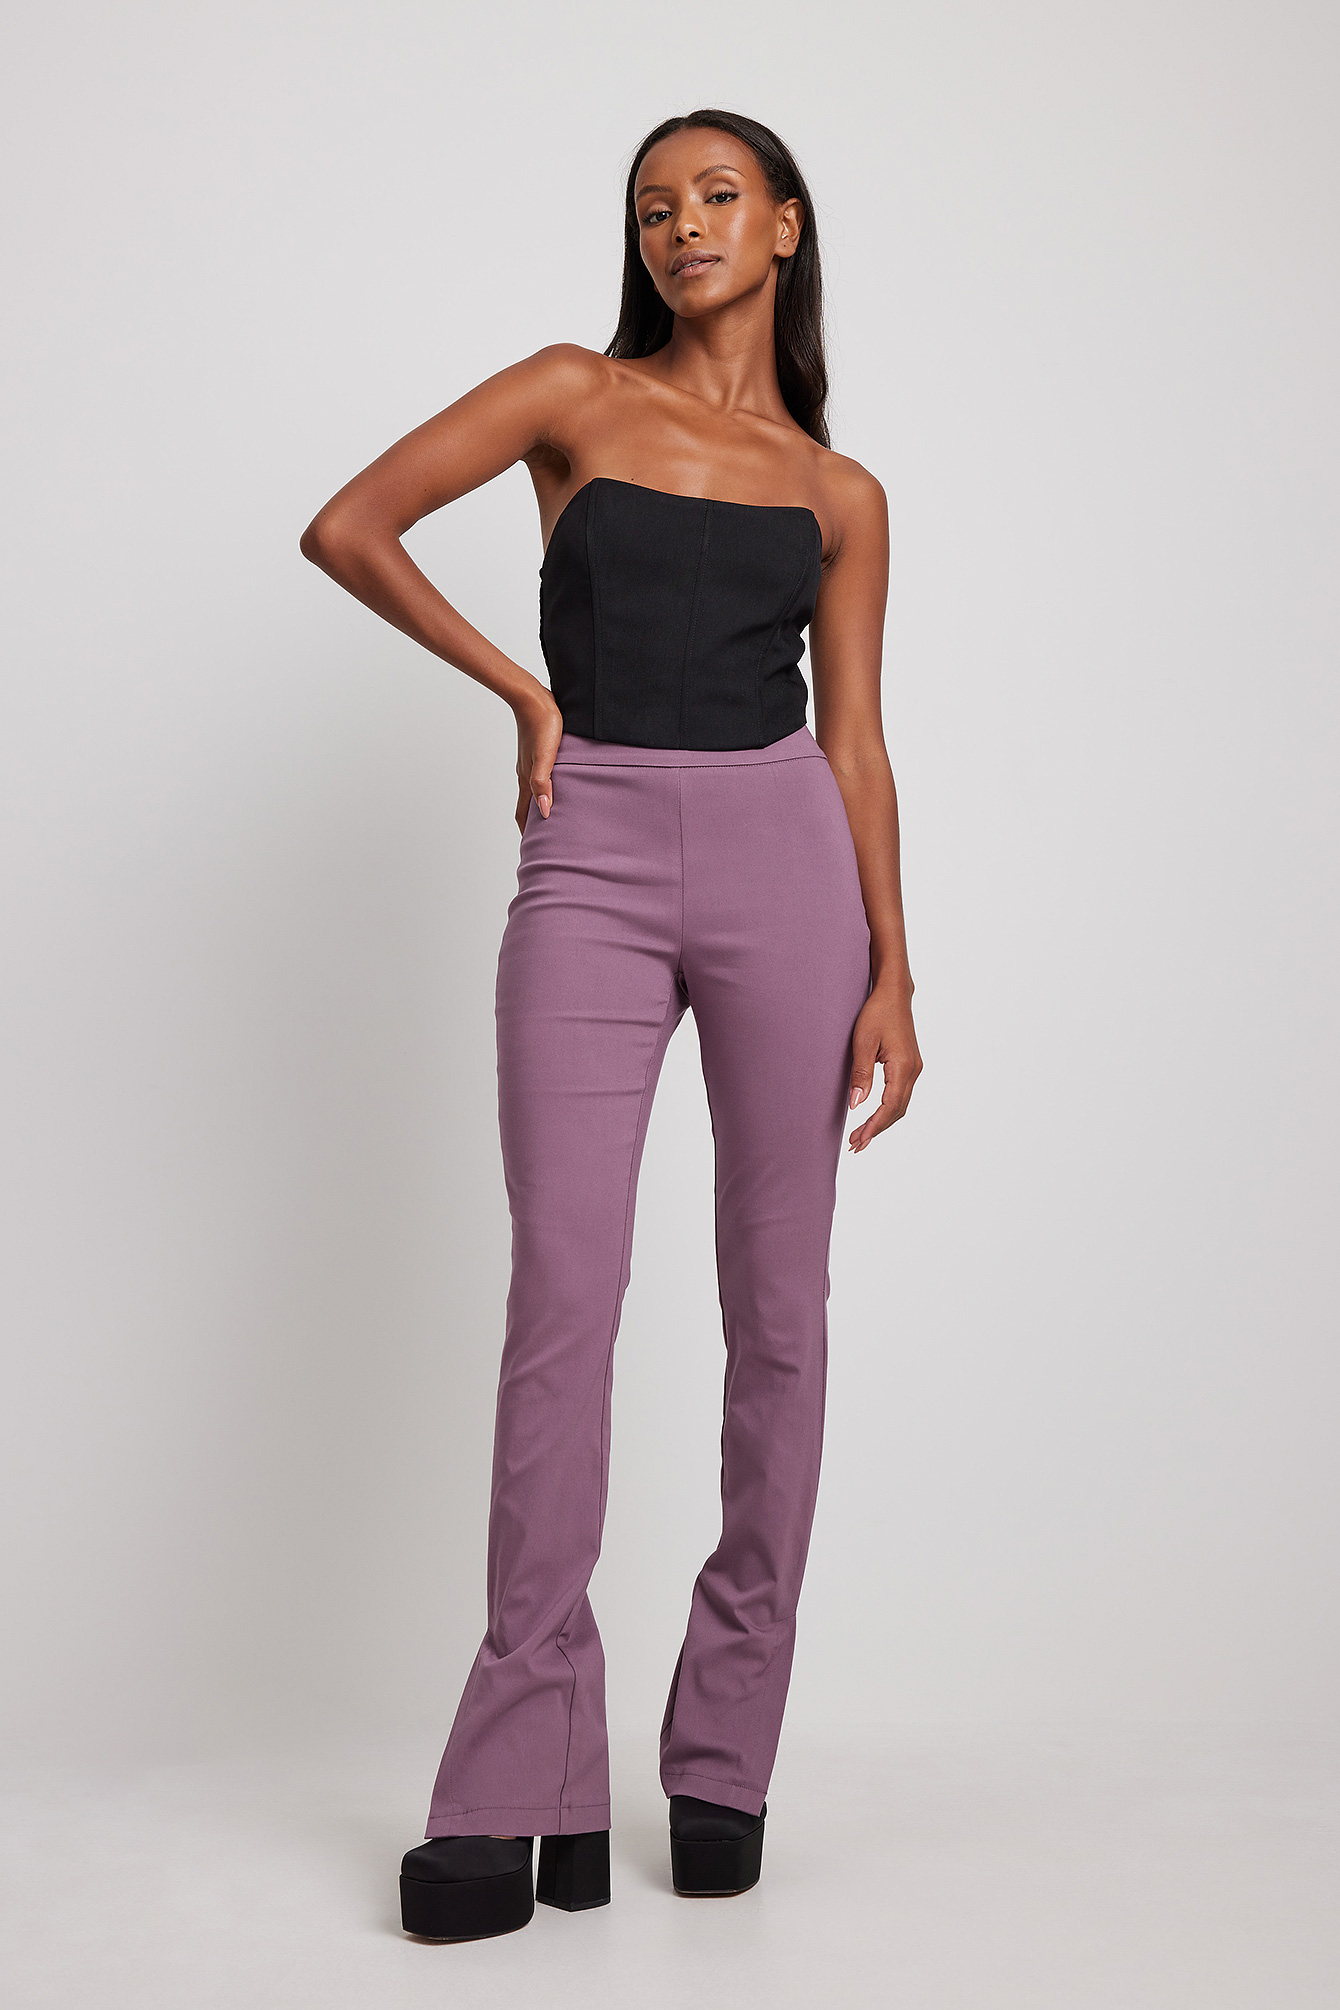 New Zara Floral Print Mini Flare Pants High Rise Trousers Light Purple  Medium